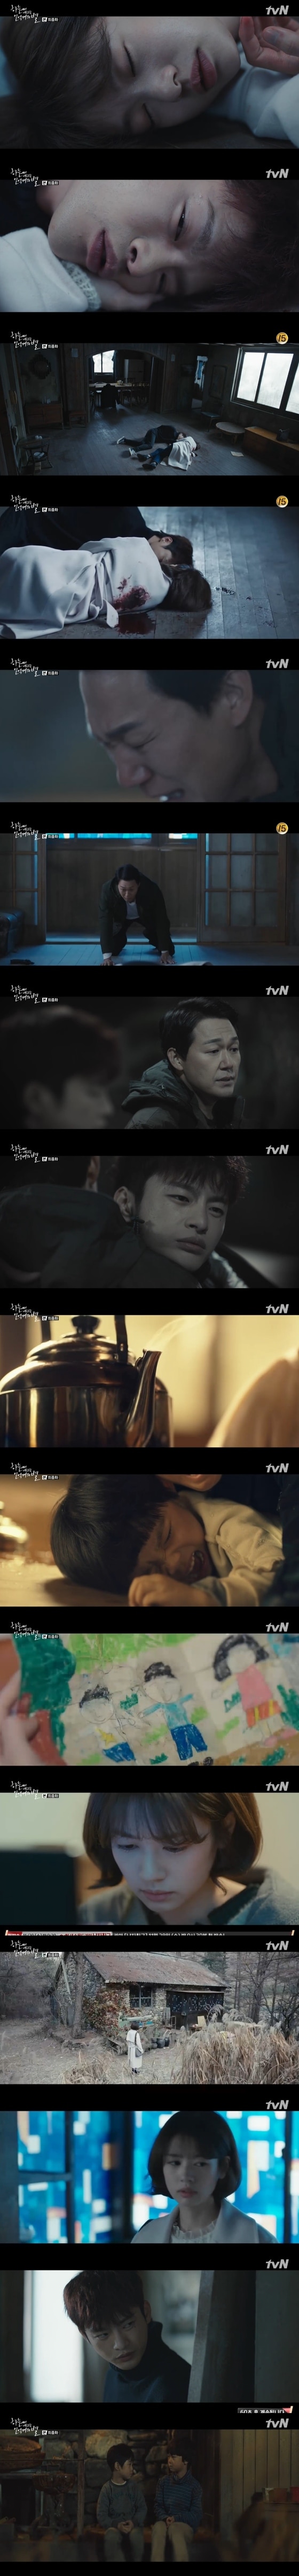 tvN 드라마 '하늘에서 내리는 일억개의 별' 캡처© News1